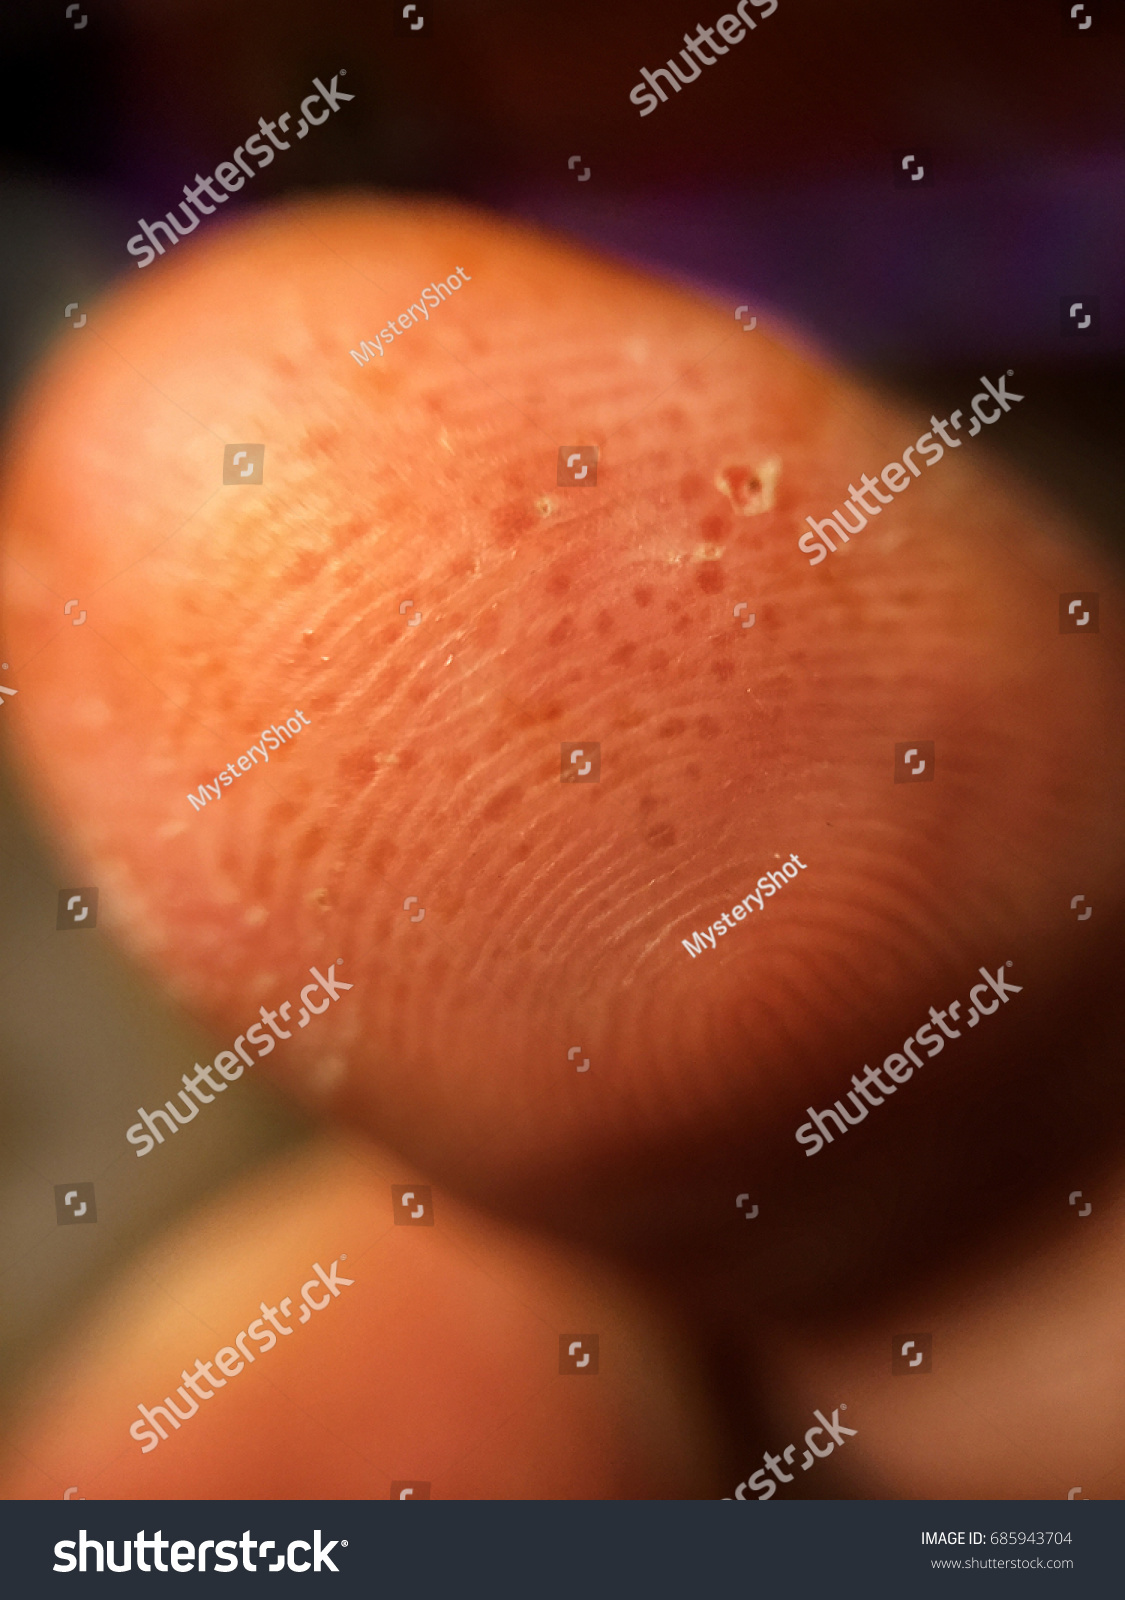 Photo De Stock Pompholyx Eczema Dyshidrosis Small Blisters Under